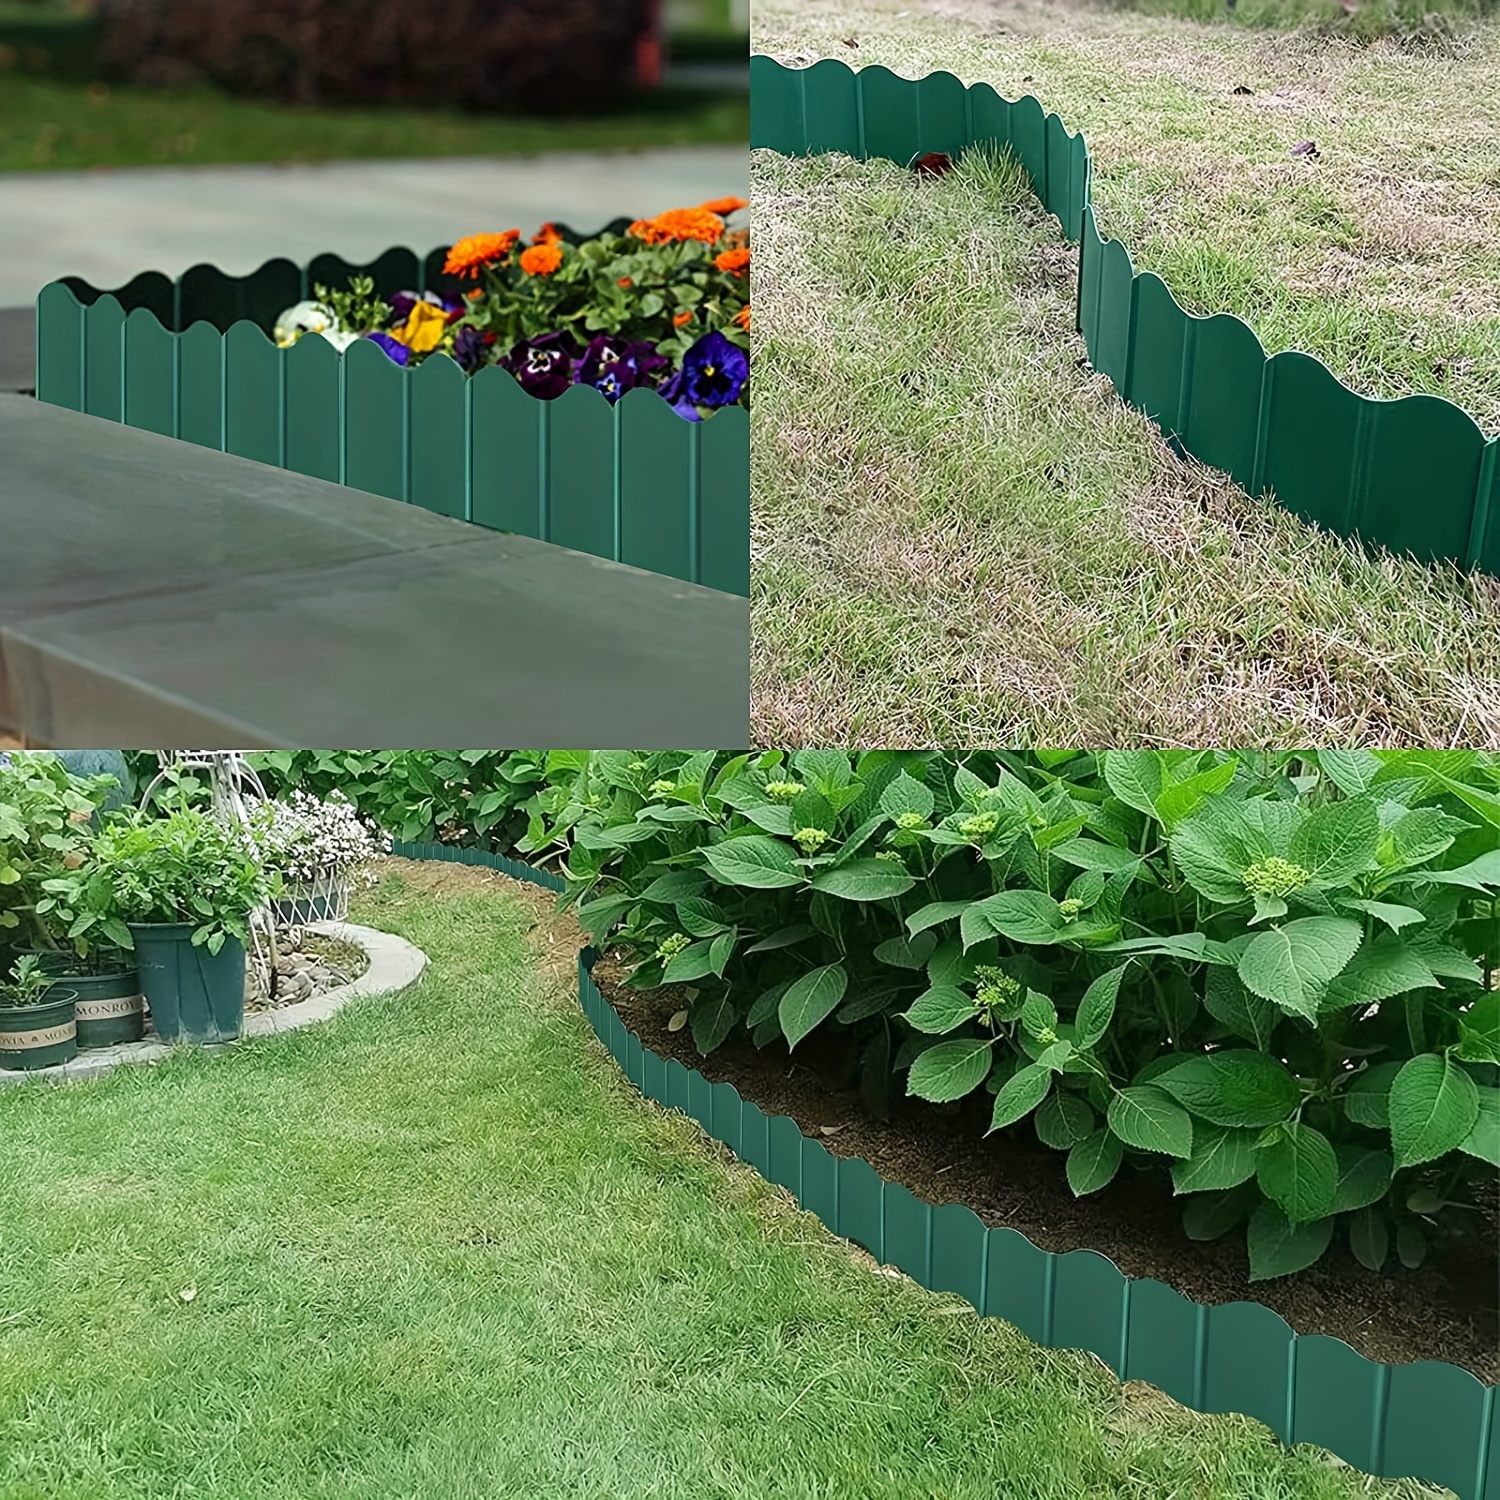 10pcs outdoor garden vegetable fence landscape edging border for lawn partition soil retaining garden decoration